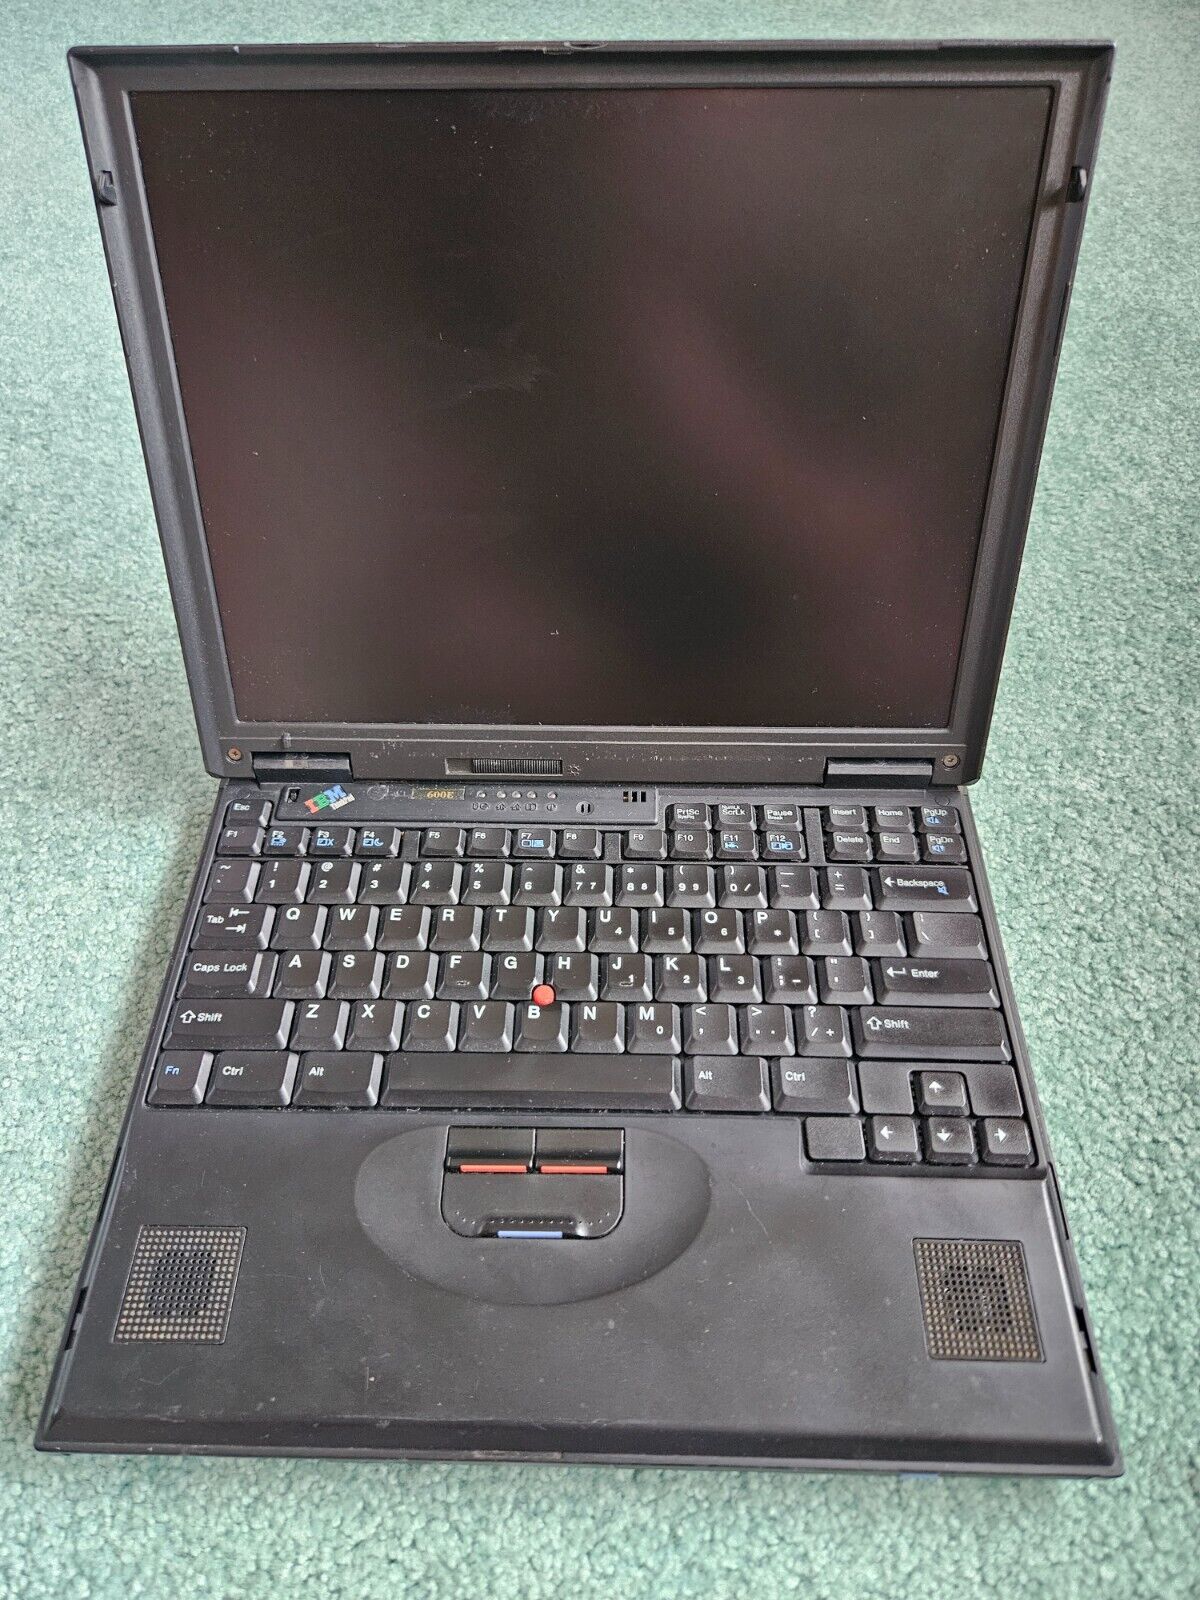 Untested IBM ThinkPad 600E with 256MB RAM